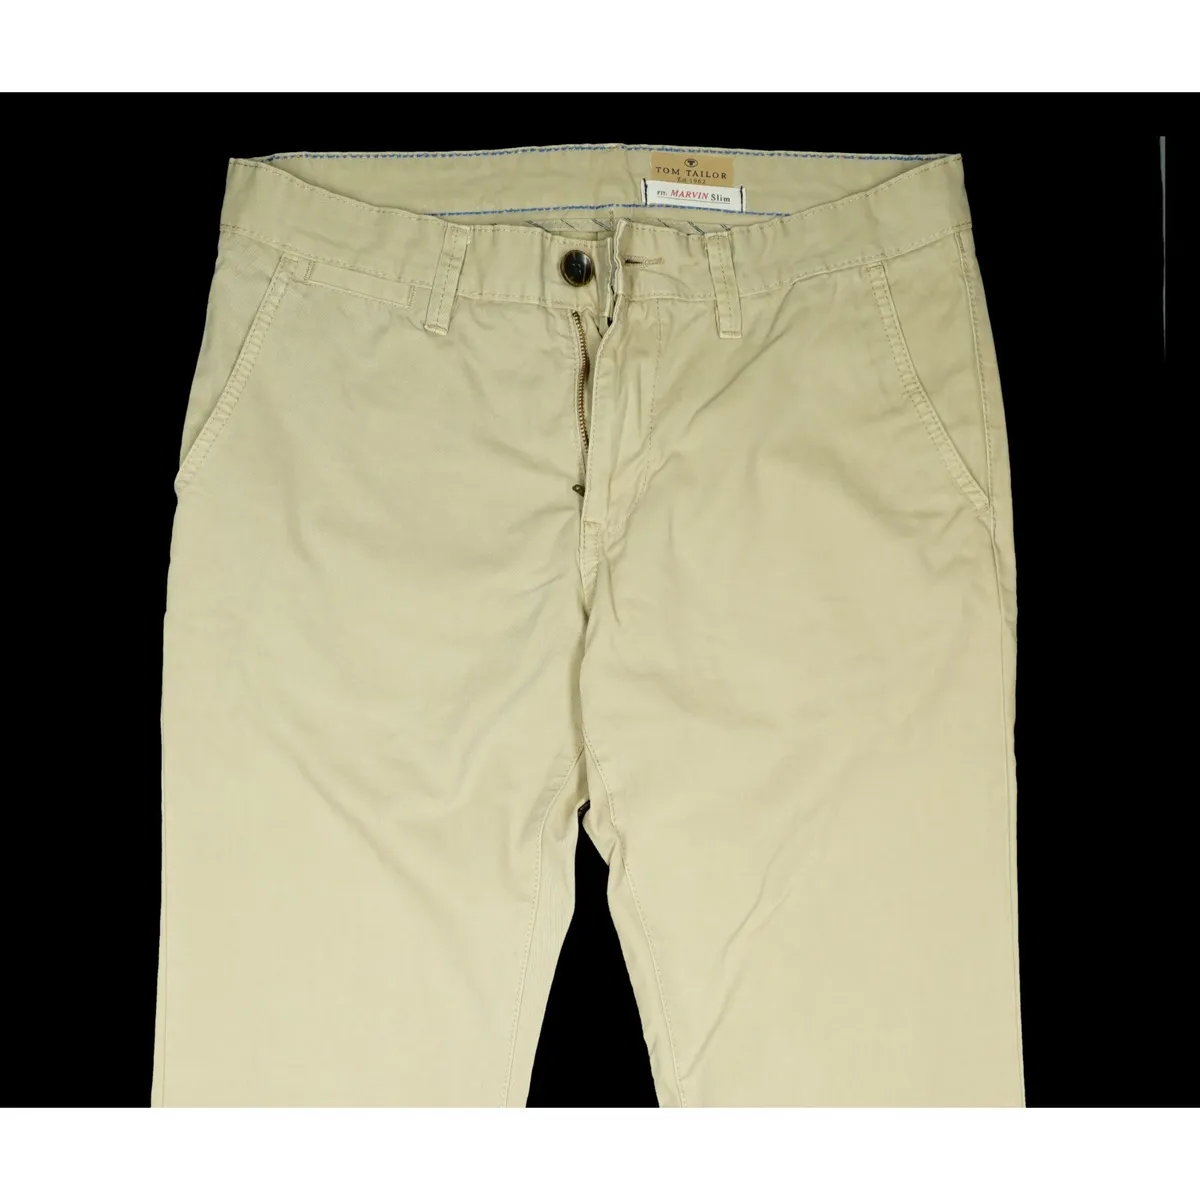 TOM TAILOR Marvin Herren Jeans Hose Slim Fit straight Leg Gr 48 M W32 L32  beige | eBay